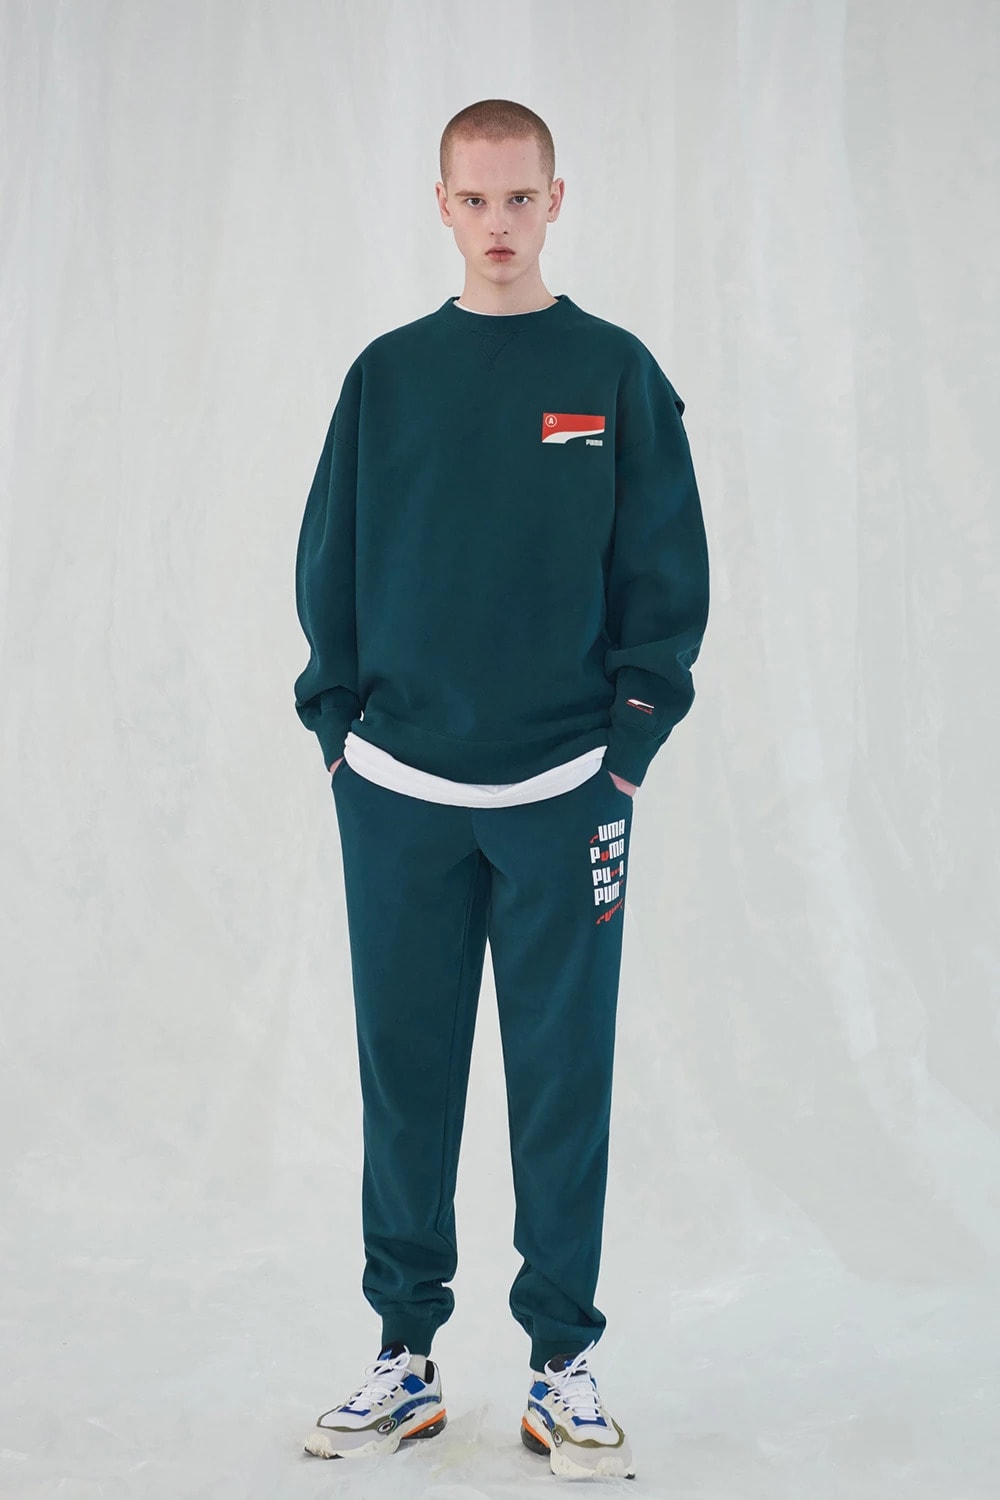 Ader Error x PUMA Spring Summer 2019 Lookbook Sweatshirt Pants Green